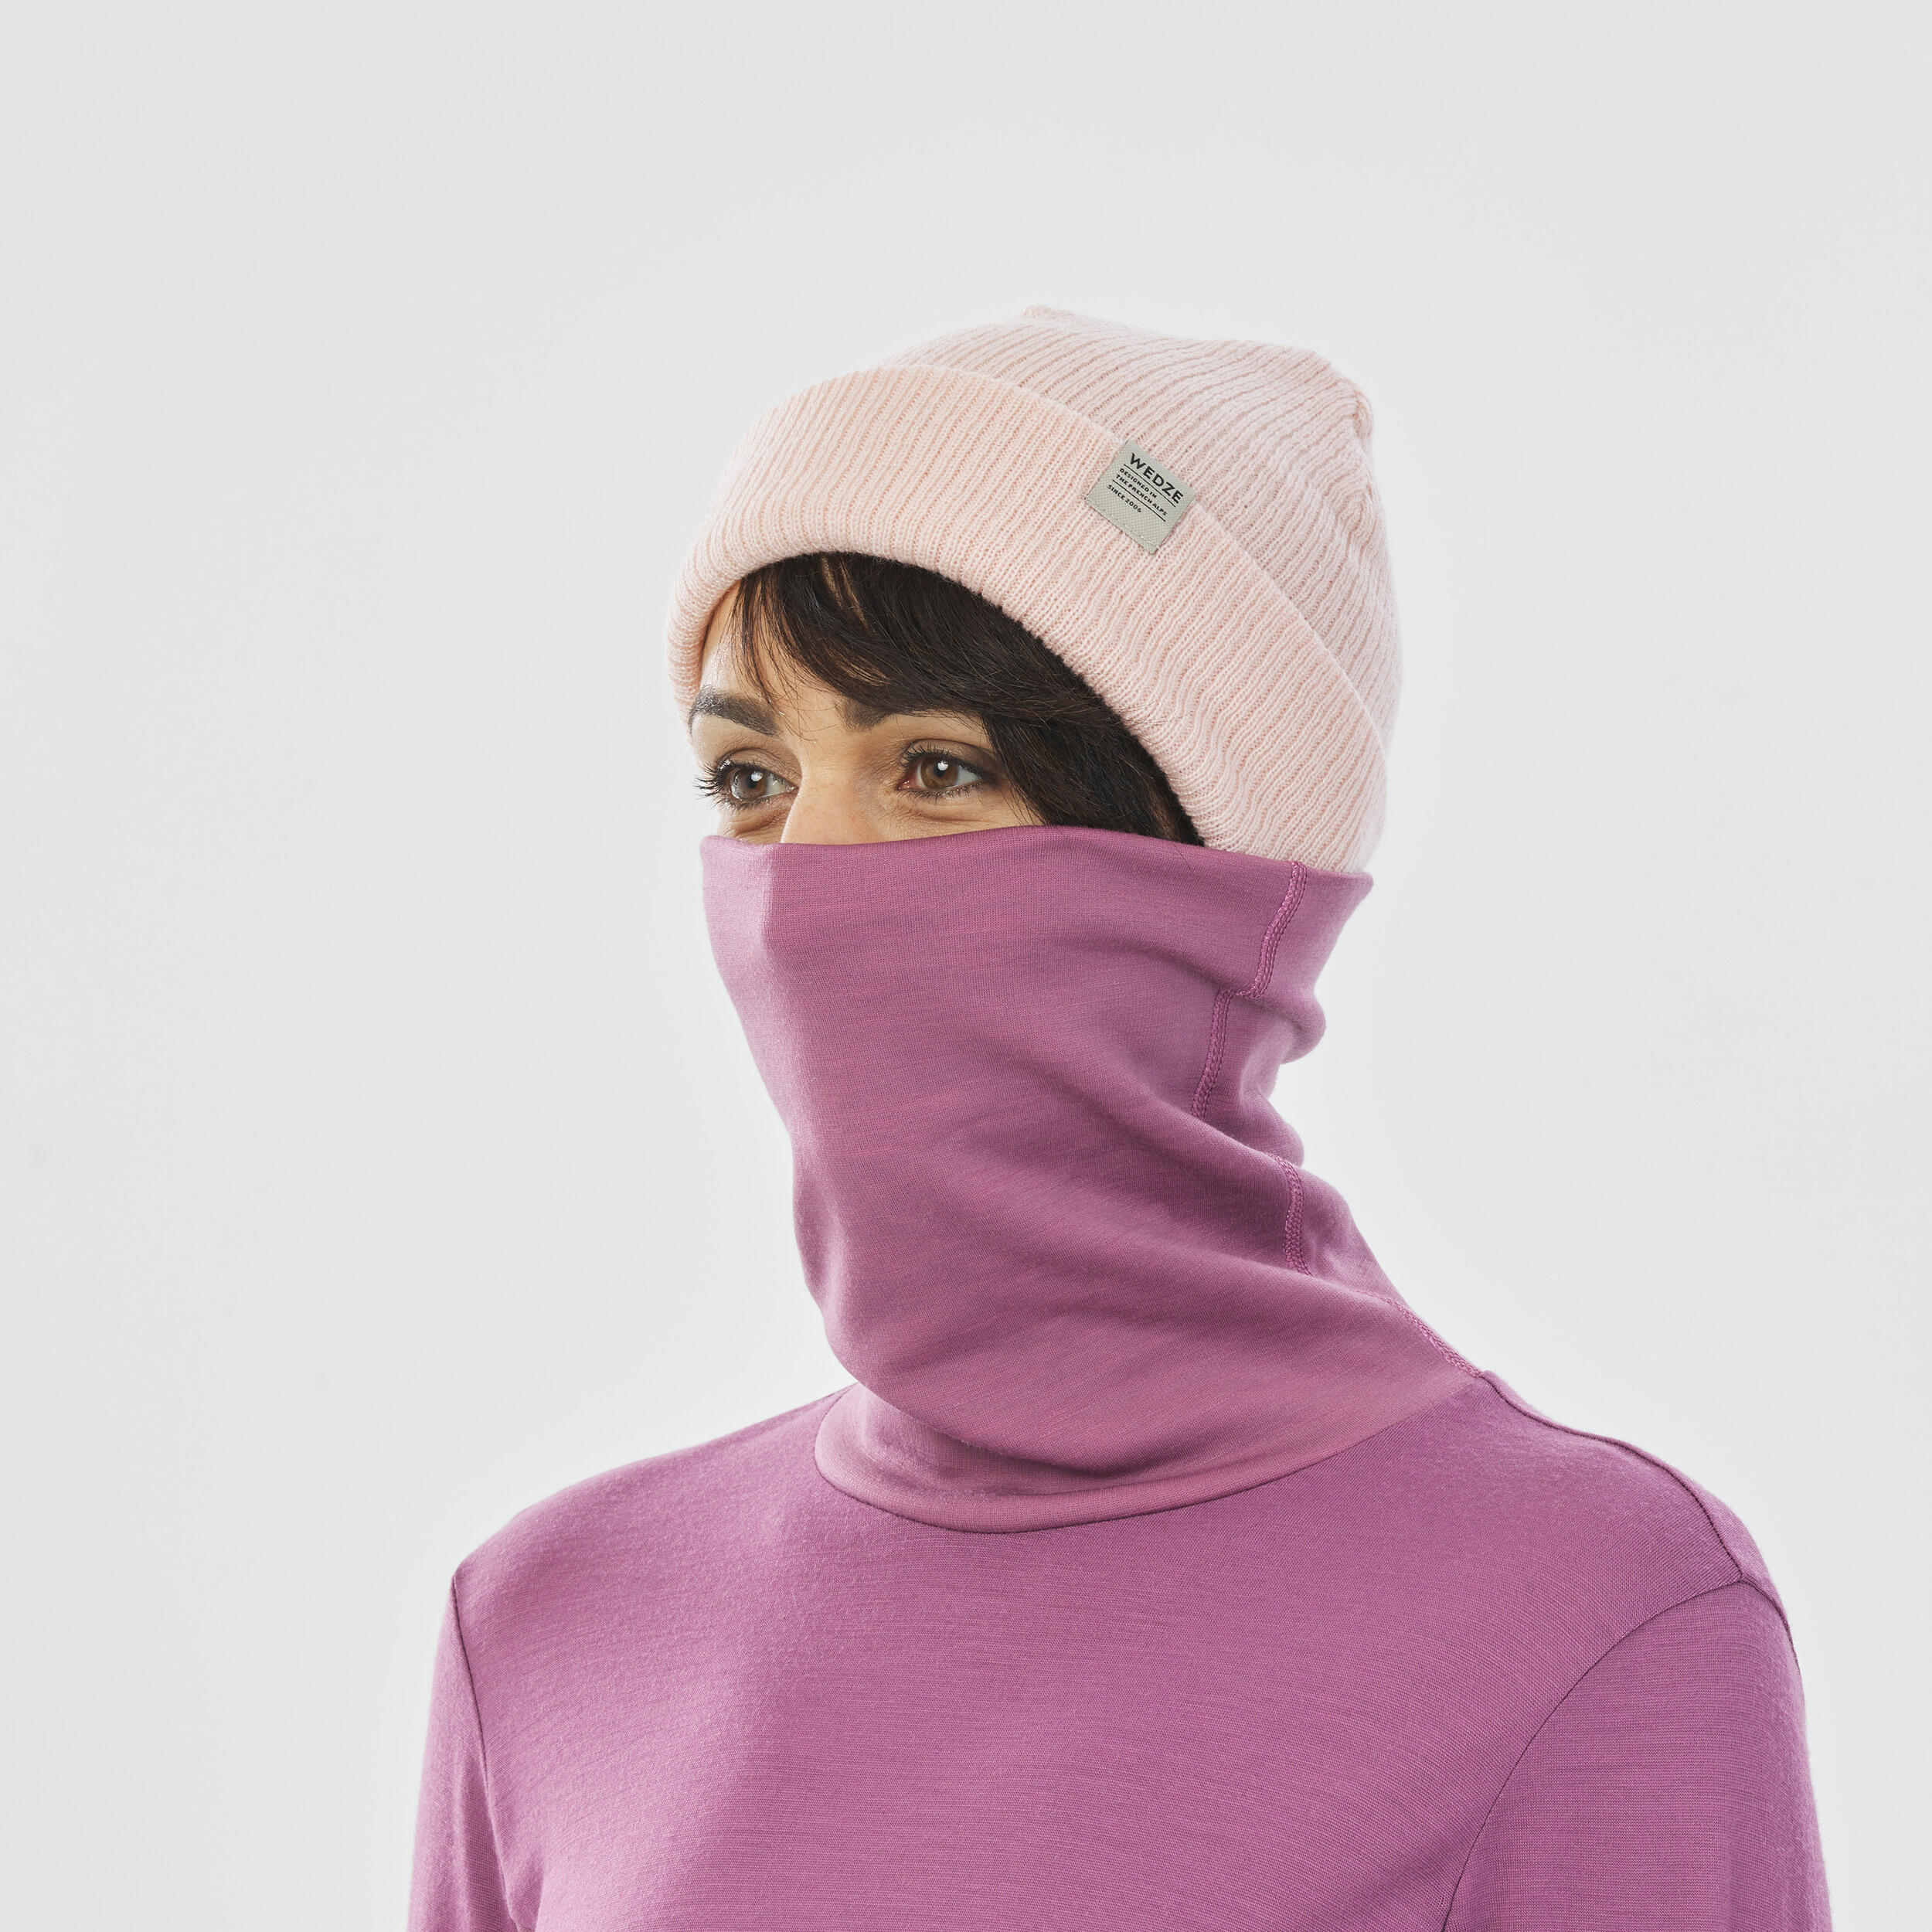 Women’s Ski Base Layer Top - BL 900 Wool High Neck -
Pink 10/10